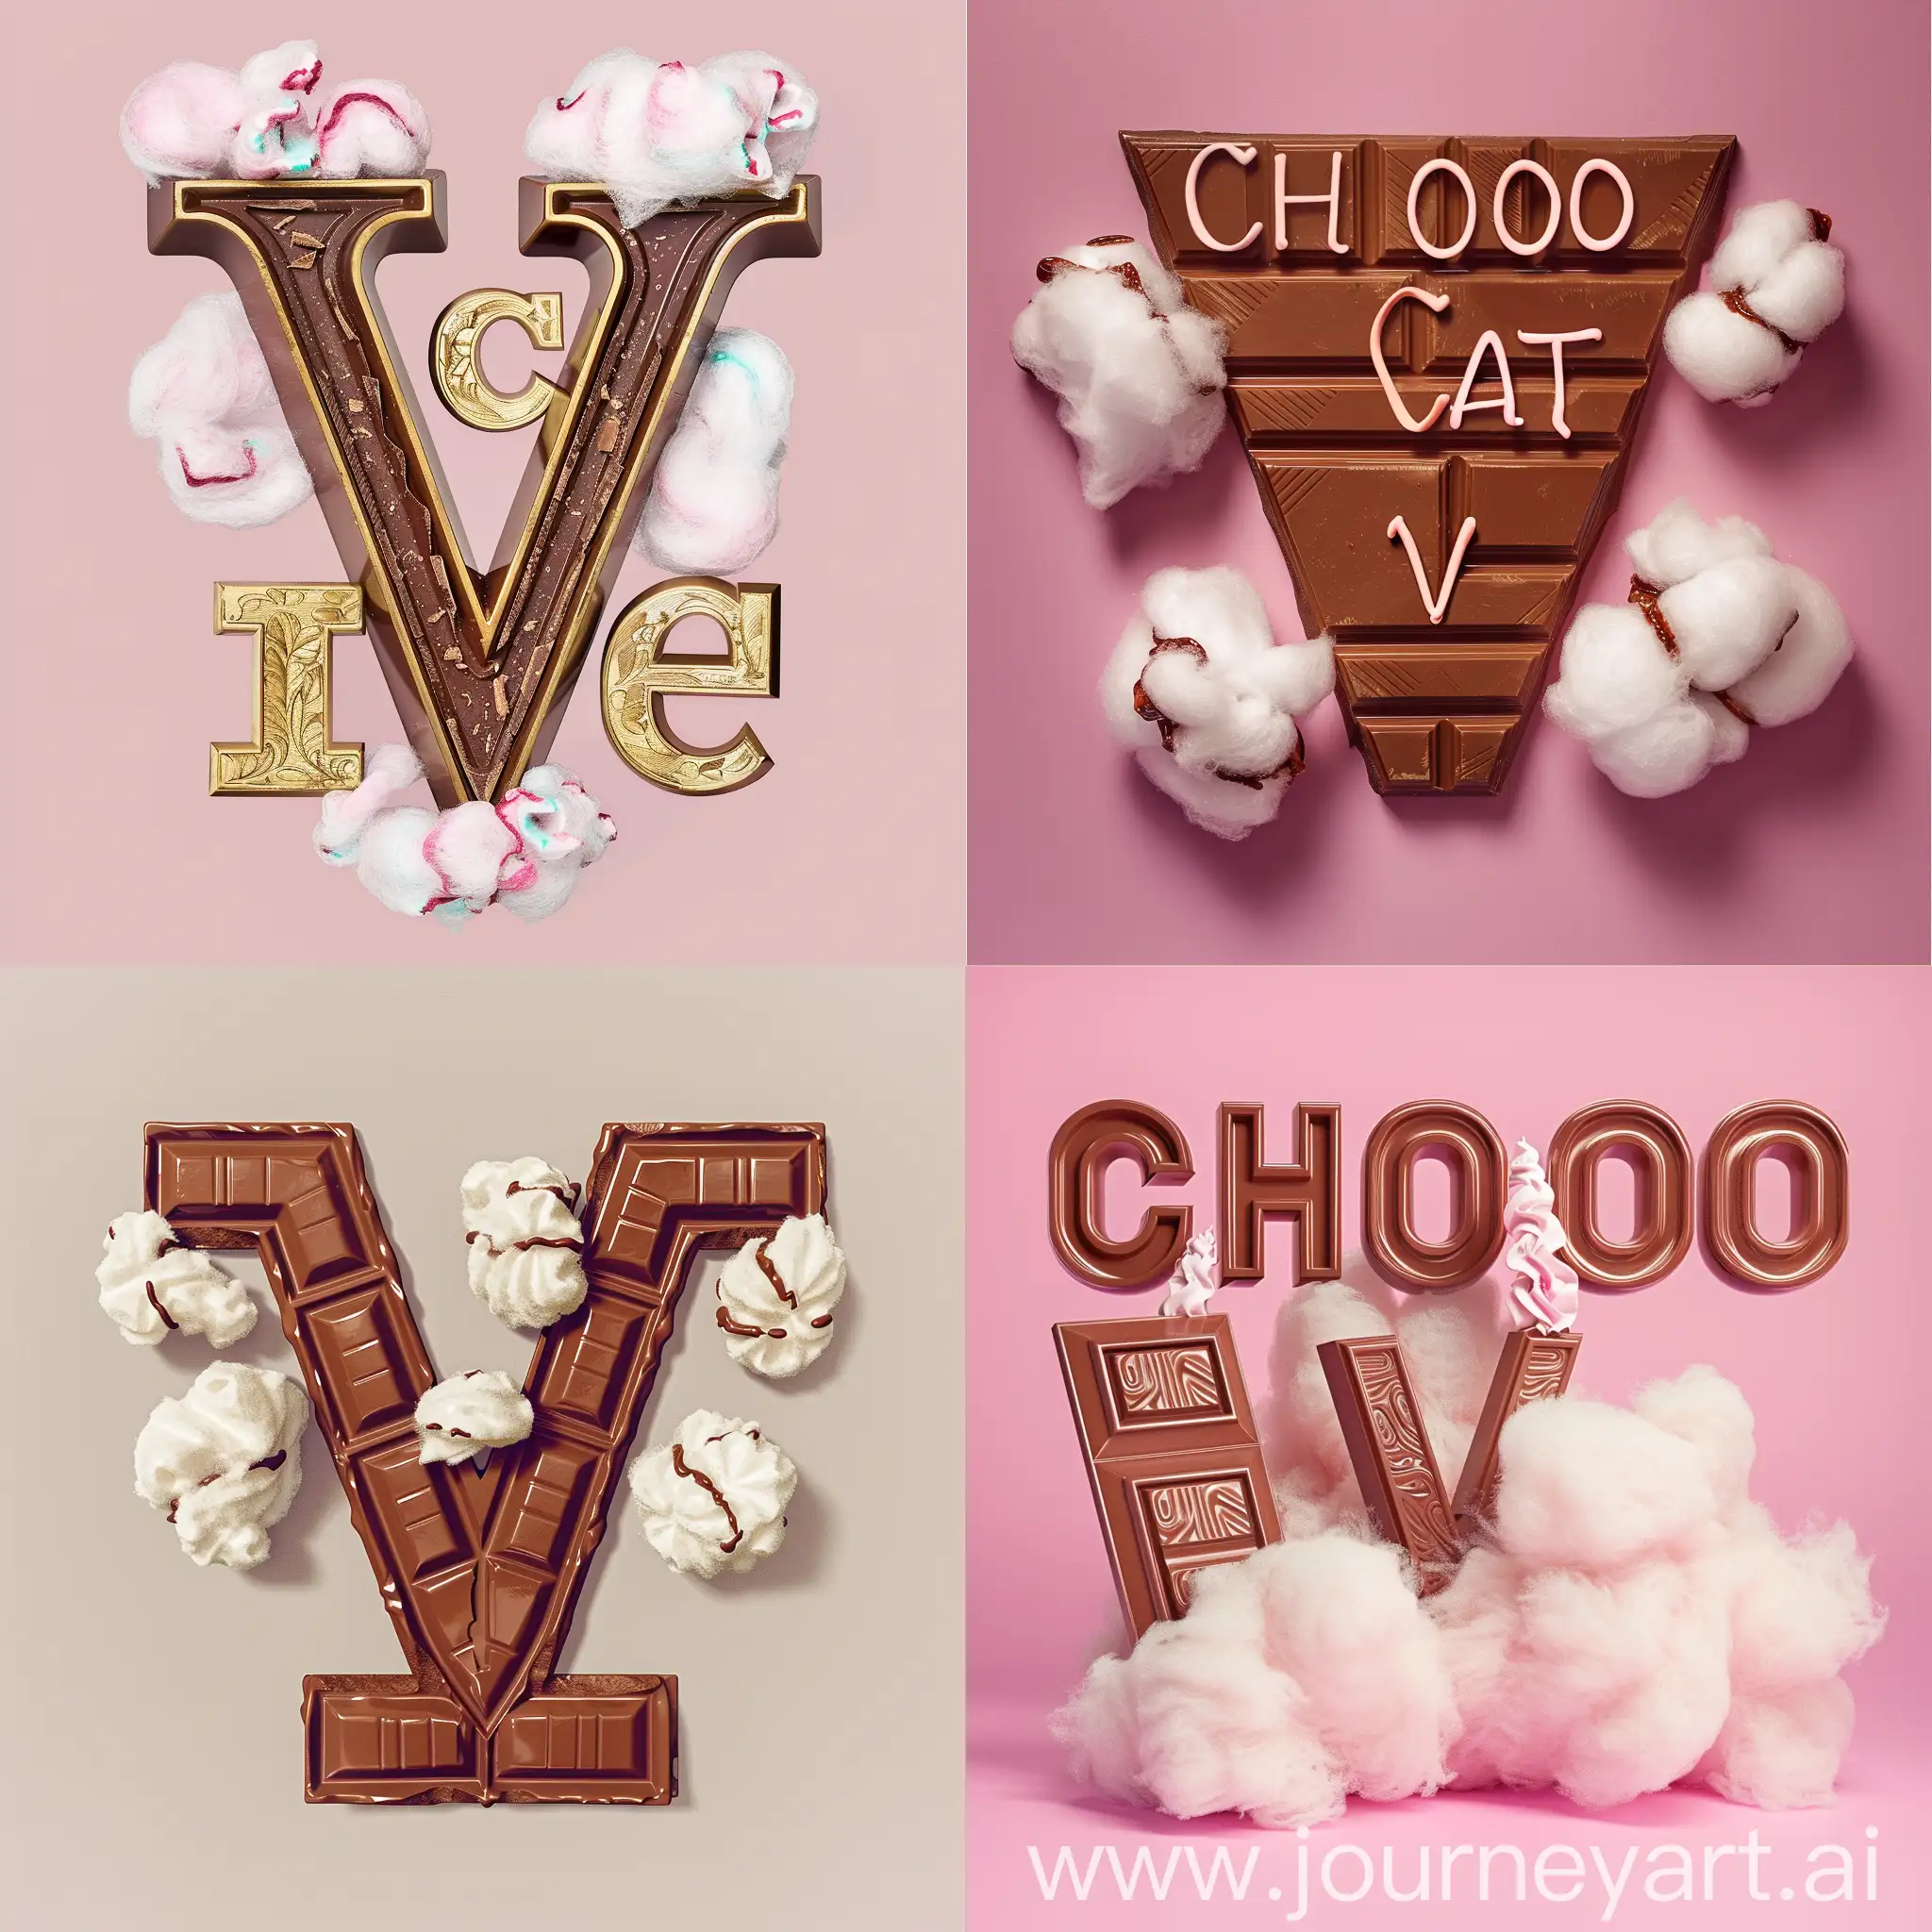 Бухквы "ChocoVat".Буквы "Ch" шоколадные, а "V" - как сахарная вата. 